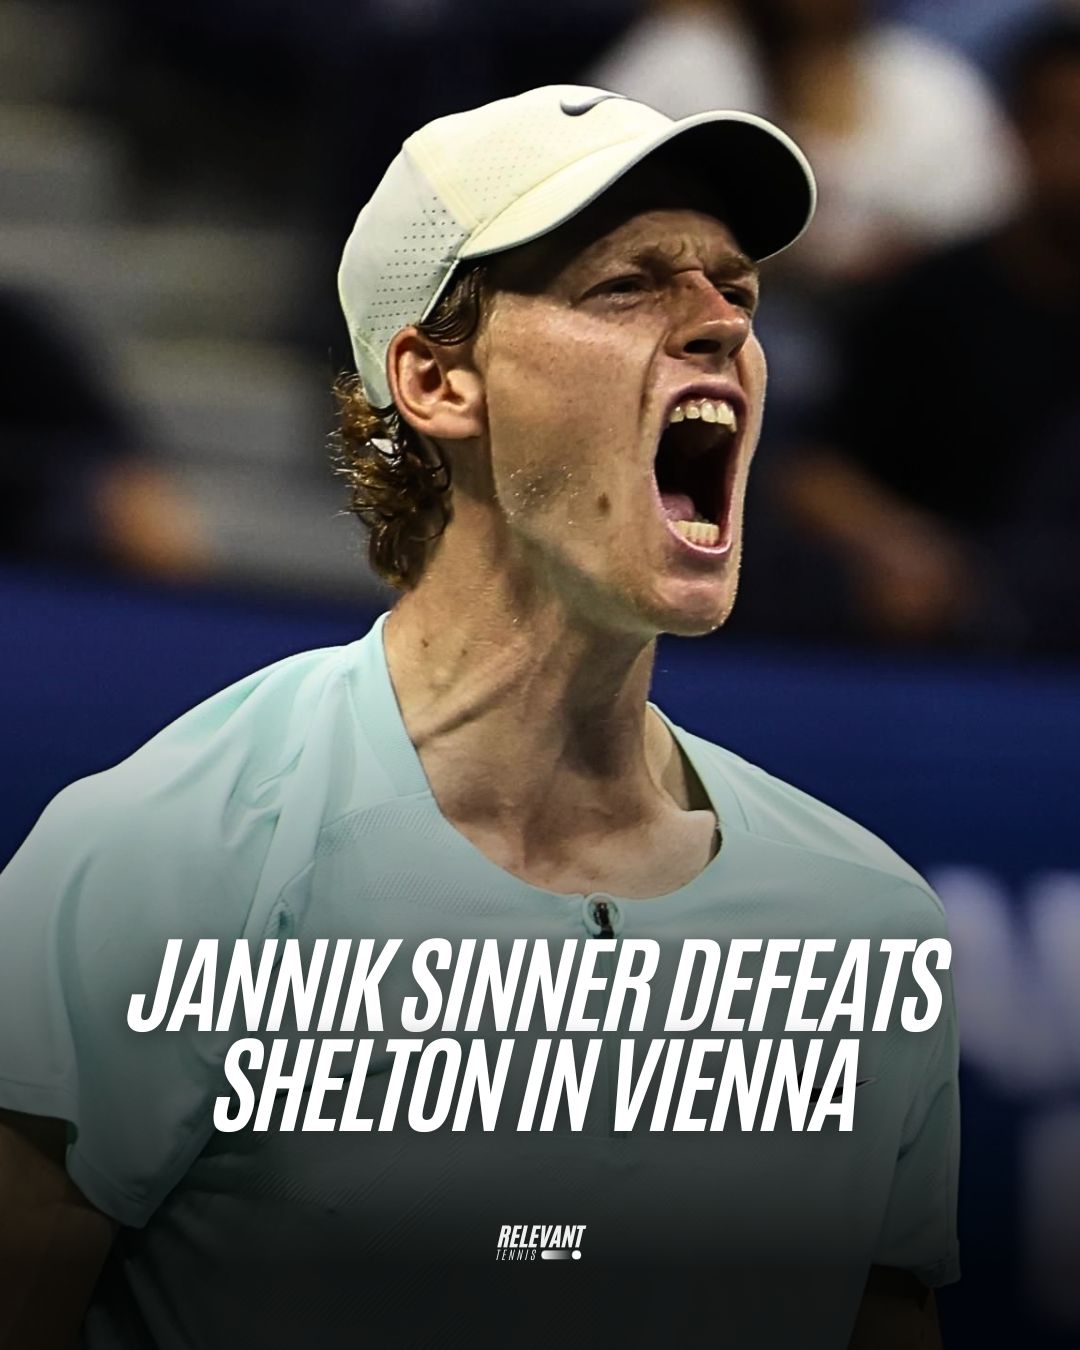 Jannik Sinner reflects on victory over Ben Shelton in Vienna